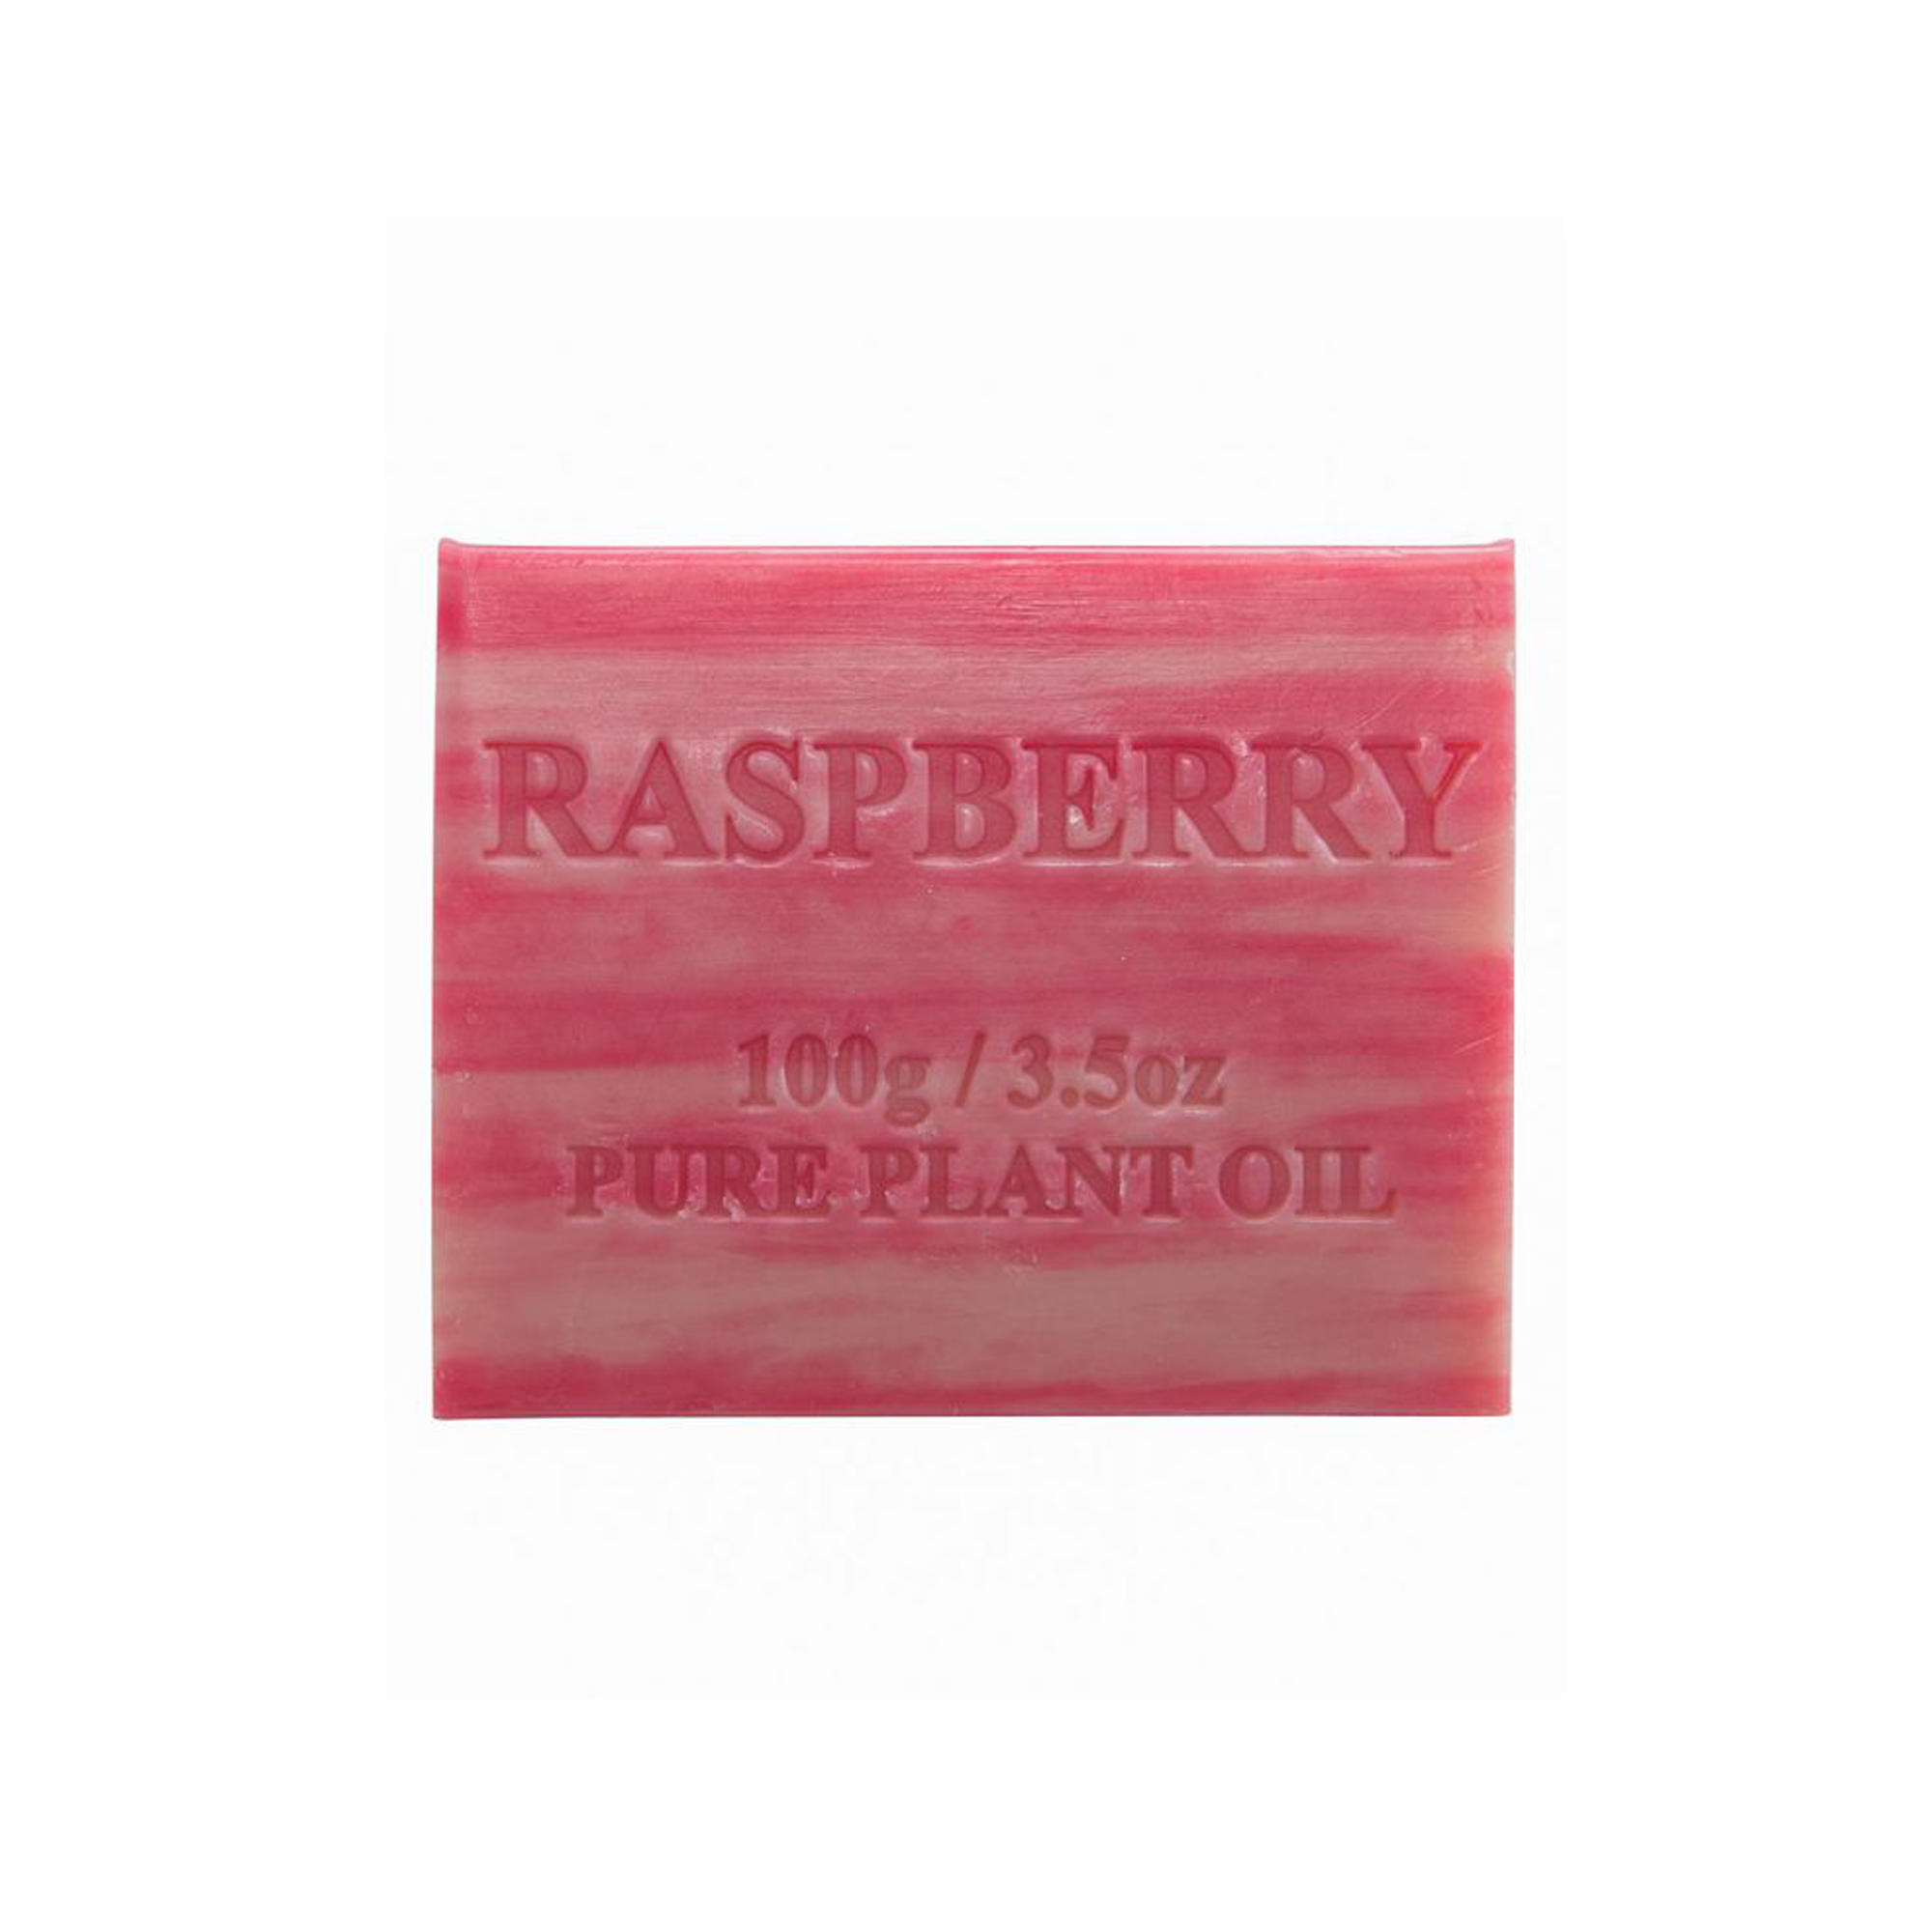 Raspberry 100g